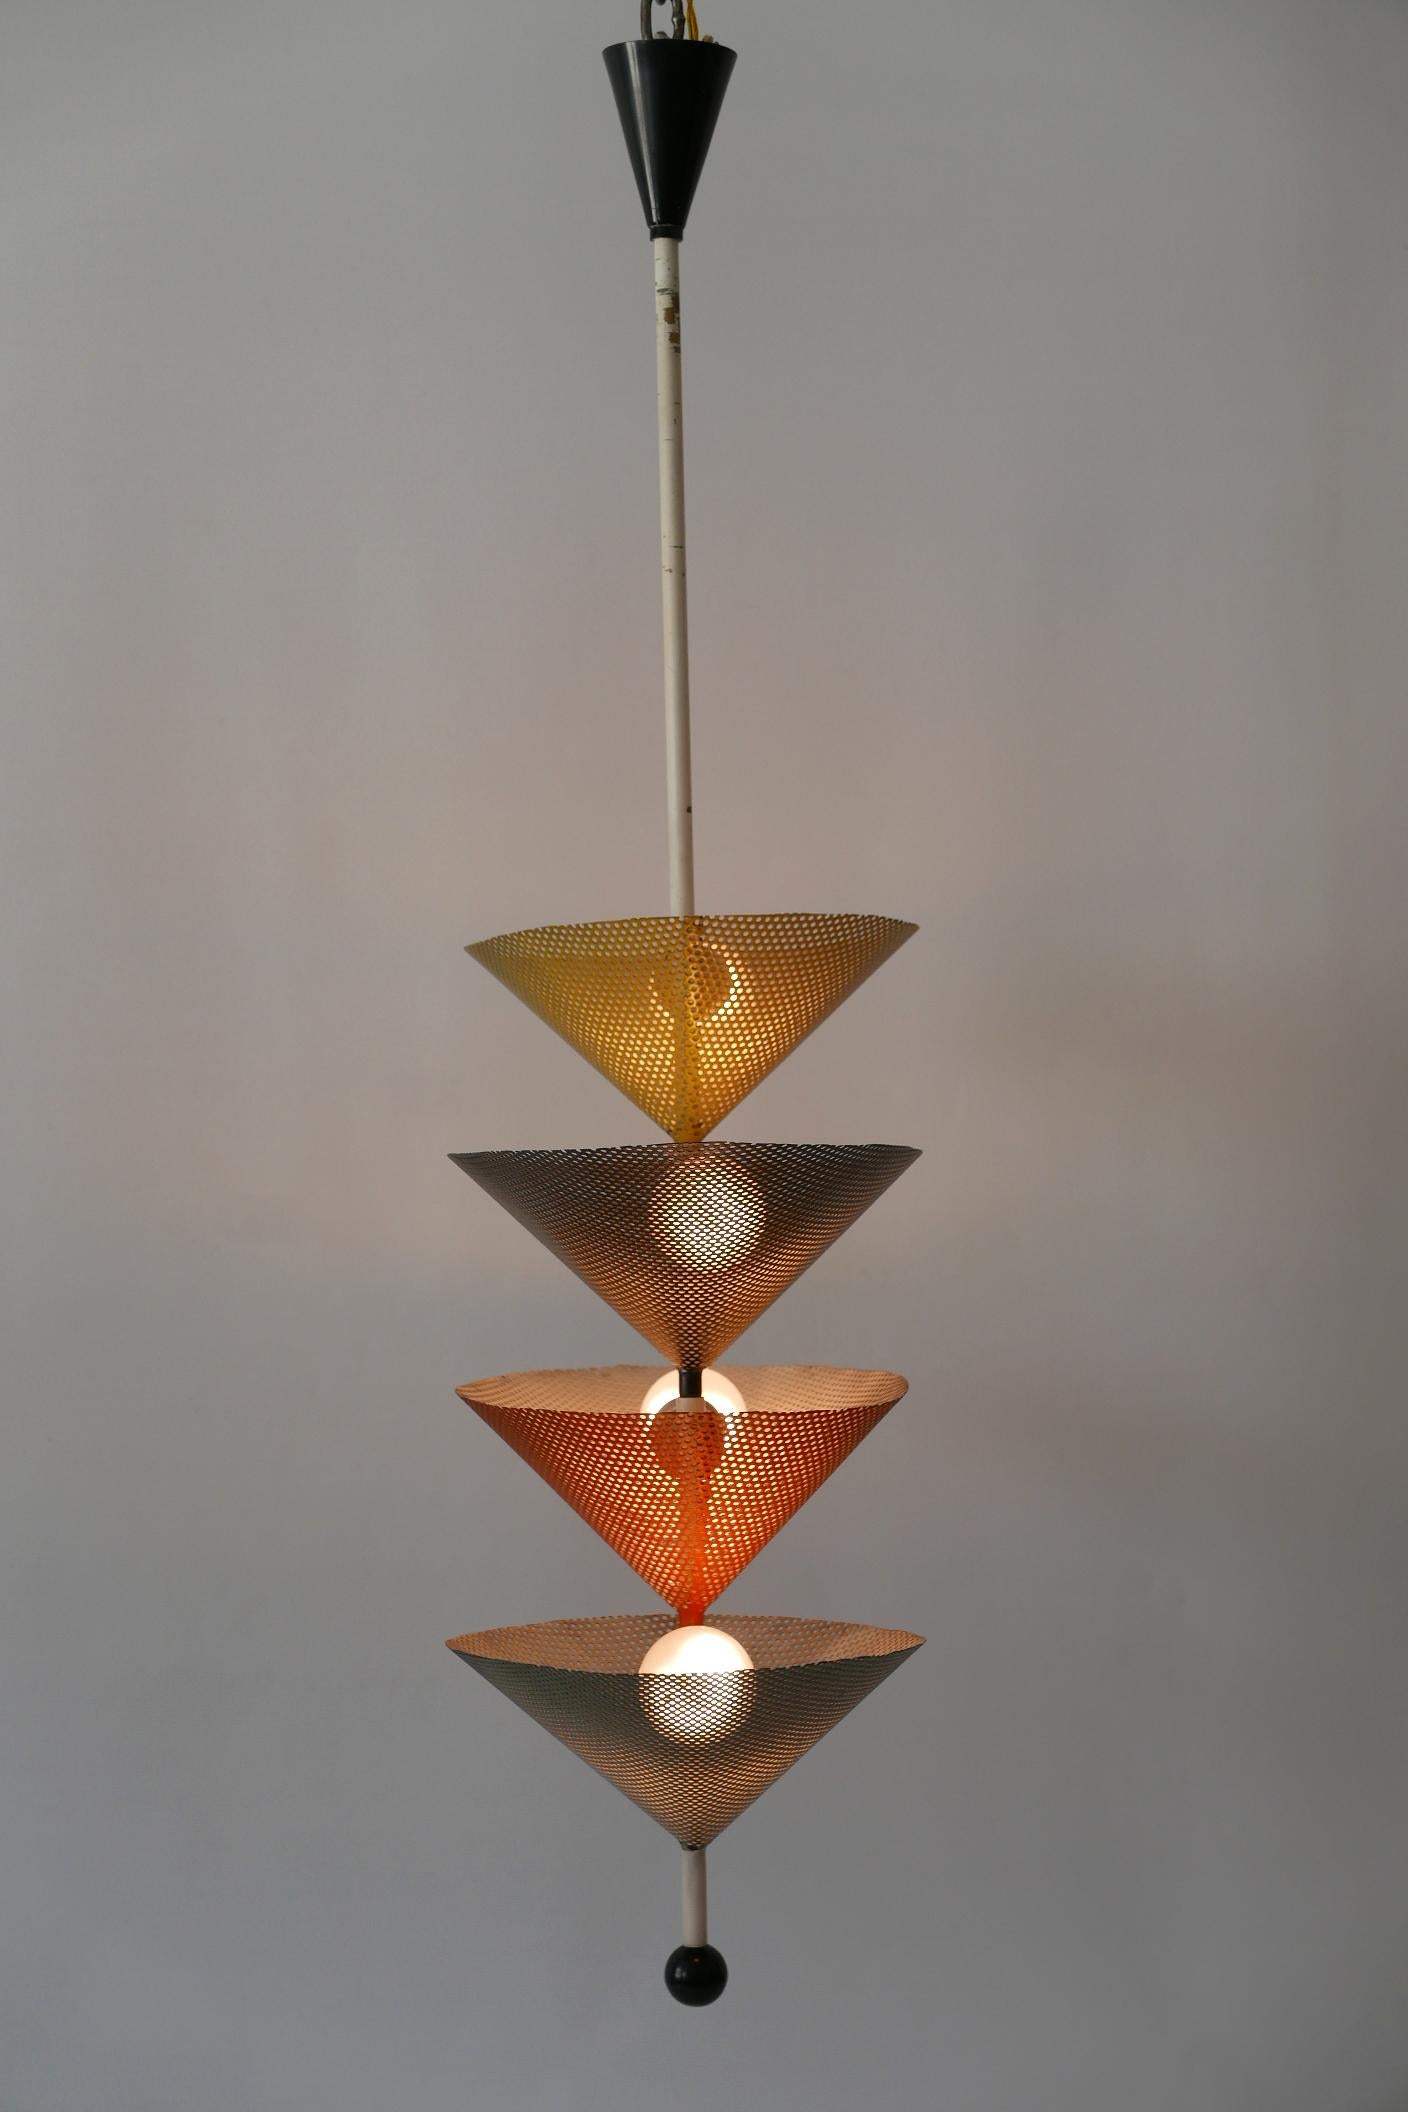 Rare Mid-Century Modern Chandelier or Pendant Lamp by Mathieu Matégot 1950s 5